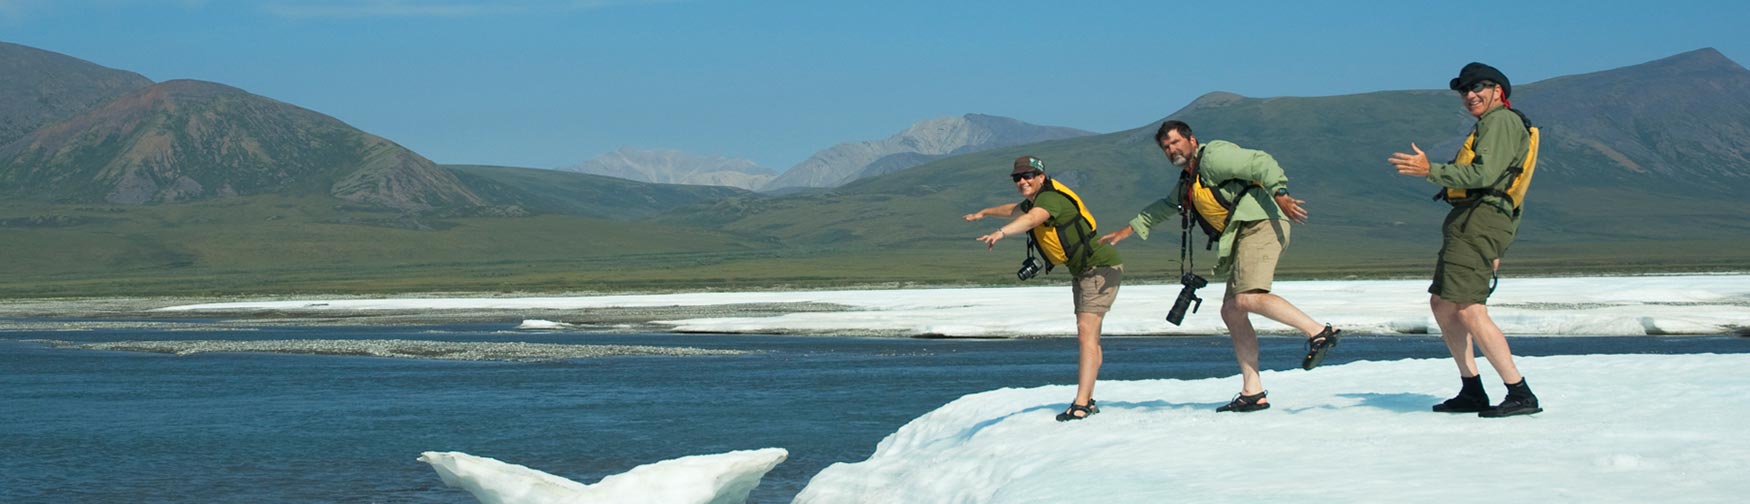 Canning River ANWR trips Arctic National Wildlife Refuge Alaska.